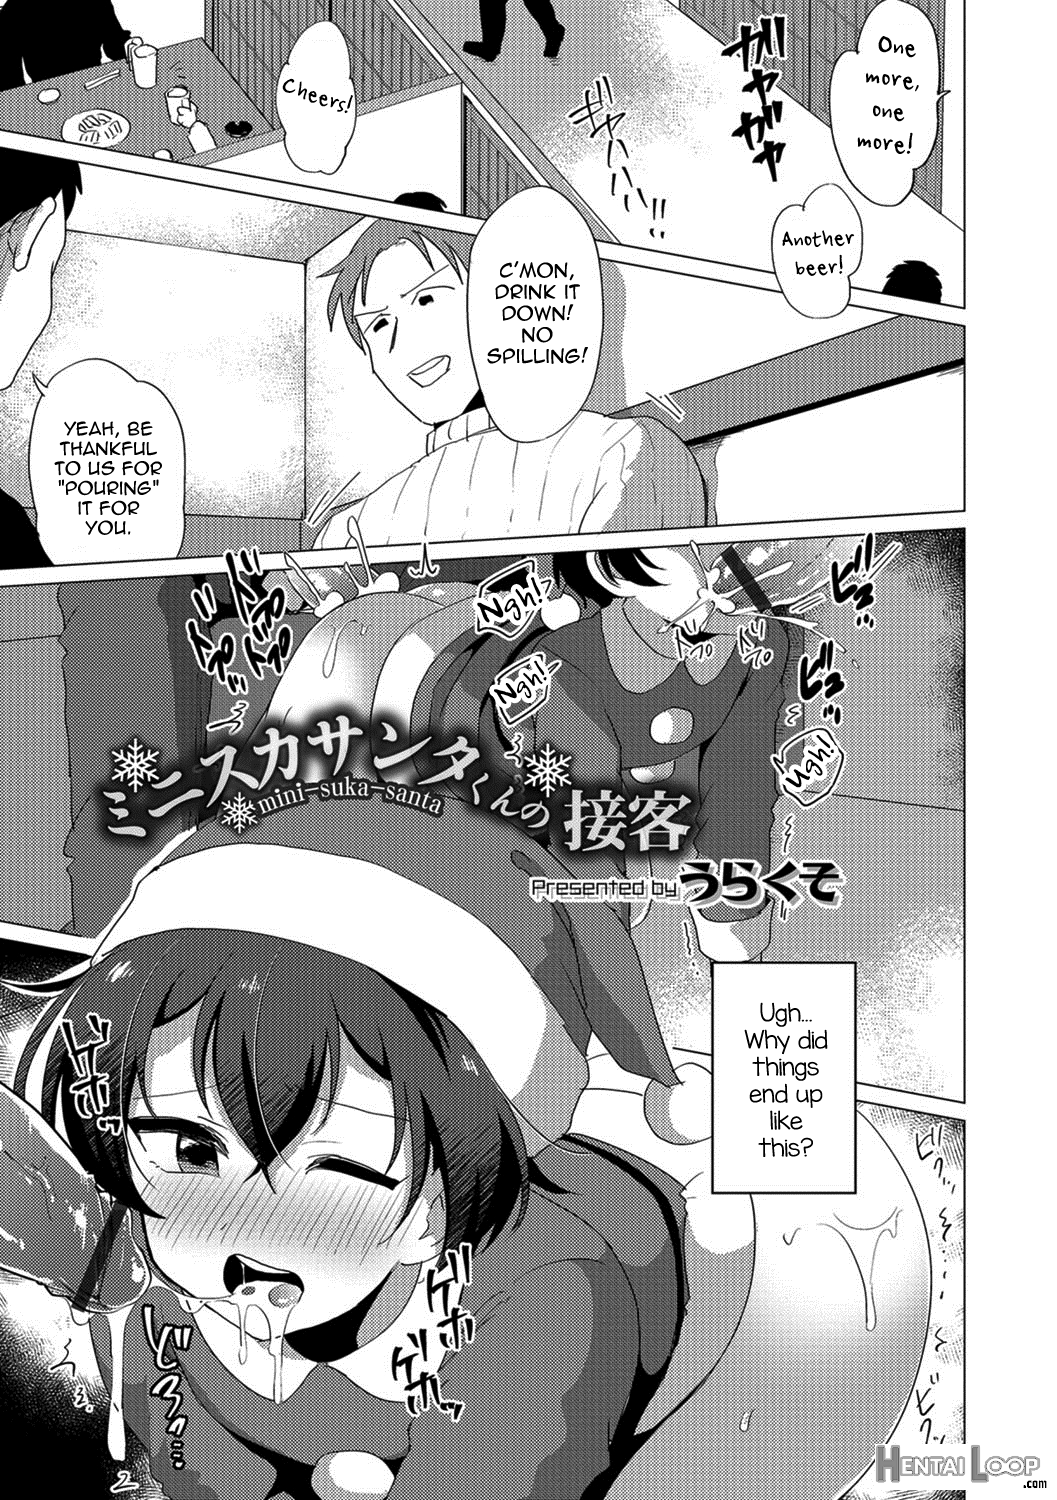 Miniskirt Santa-kun's Customer Service page 1